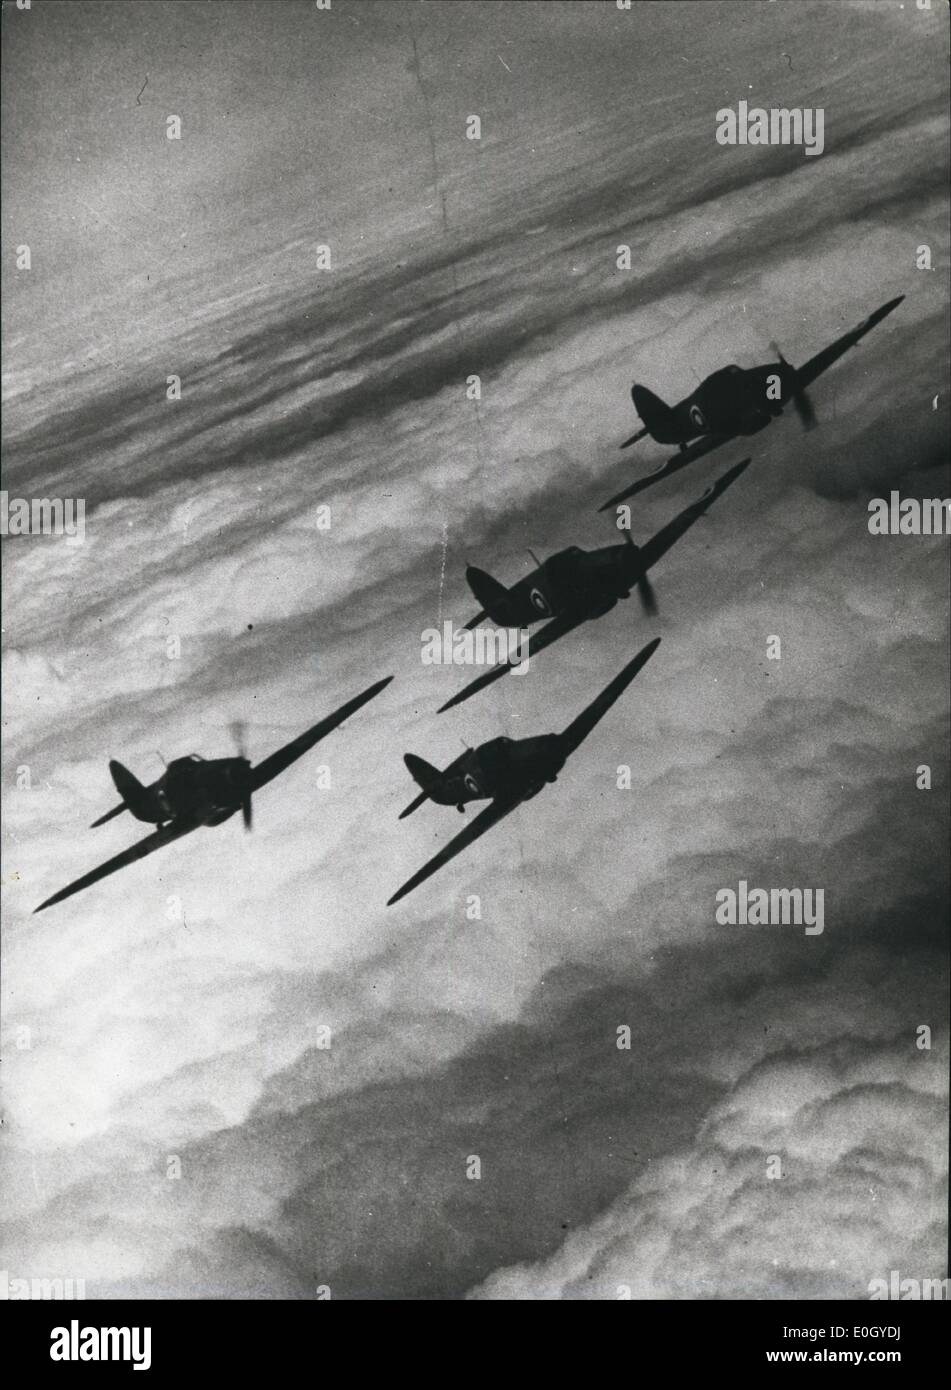 Jan 1, 1940 - un vuelo de aviones de combate Hawker Hurricane. (Fecha exacta desconocida) APRESS Foto de stock